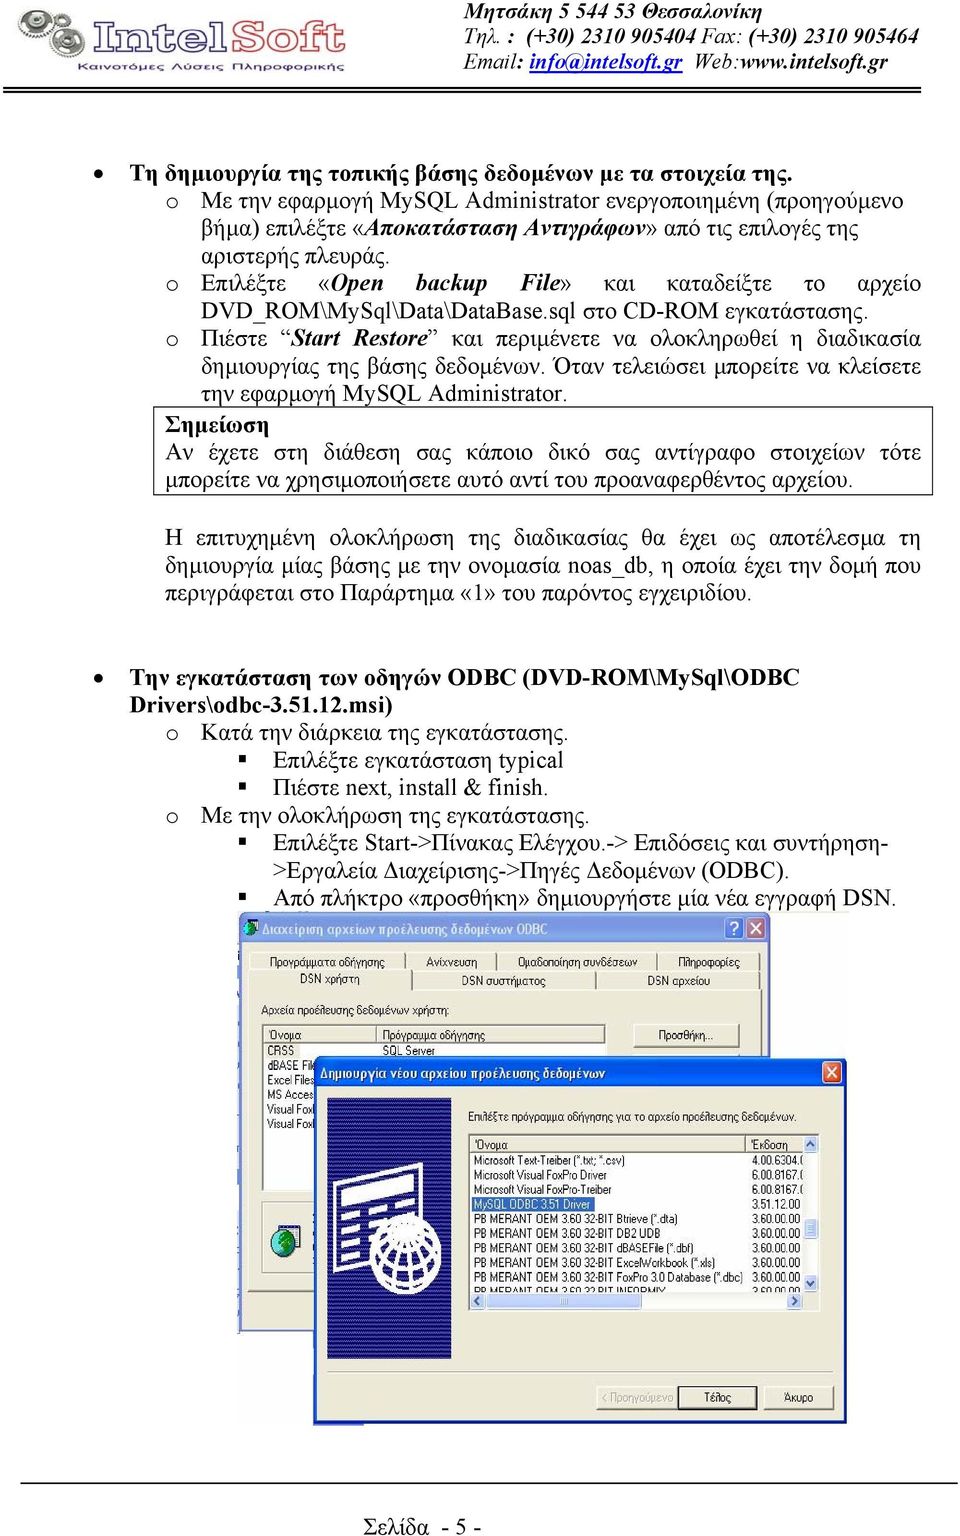 o Επιλέξτε «Open backup File» και καταδείξτε το αρχείο DVD_ROM\MySql\Data\DataBase.sql στο CD-ROM εγκατάστασης.